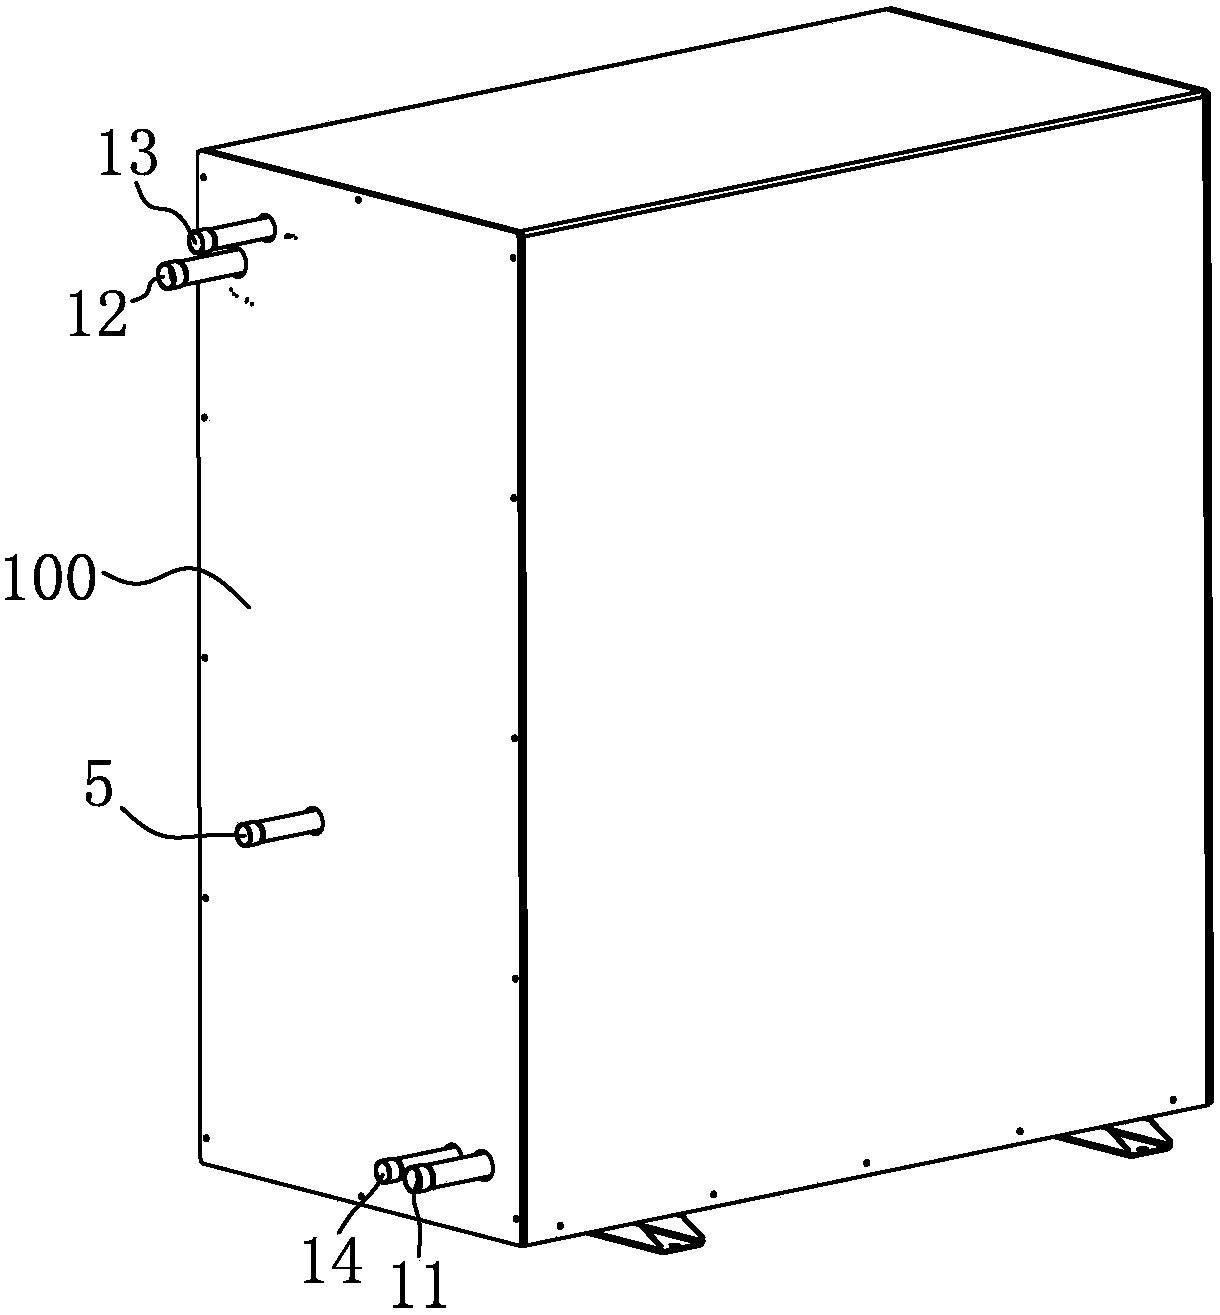 A casing condenser